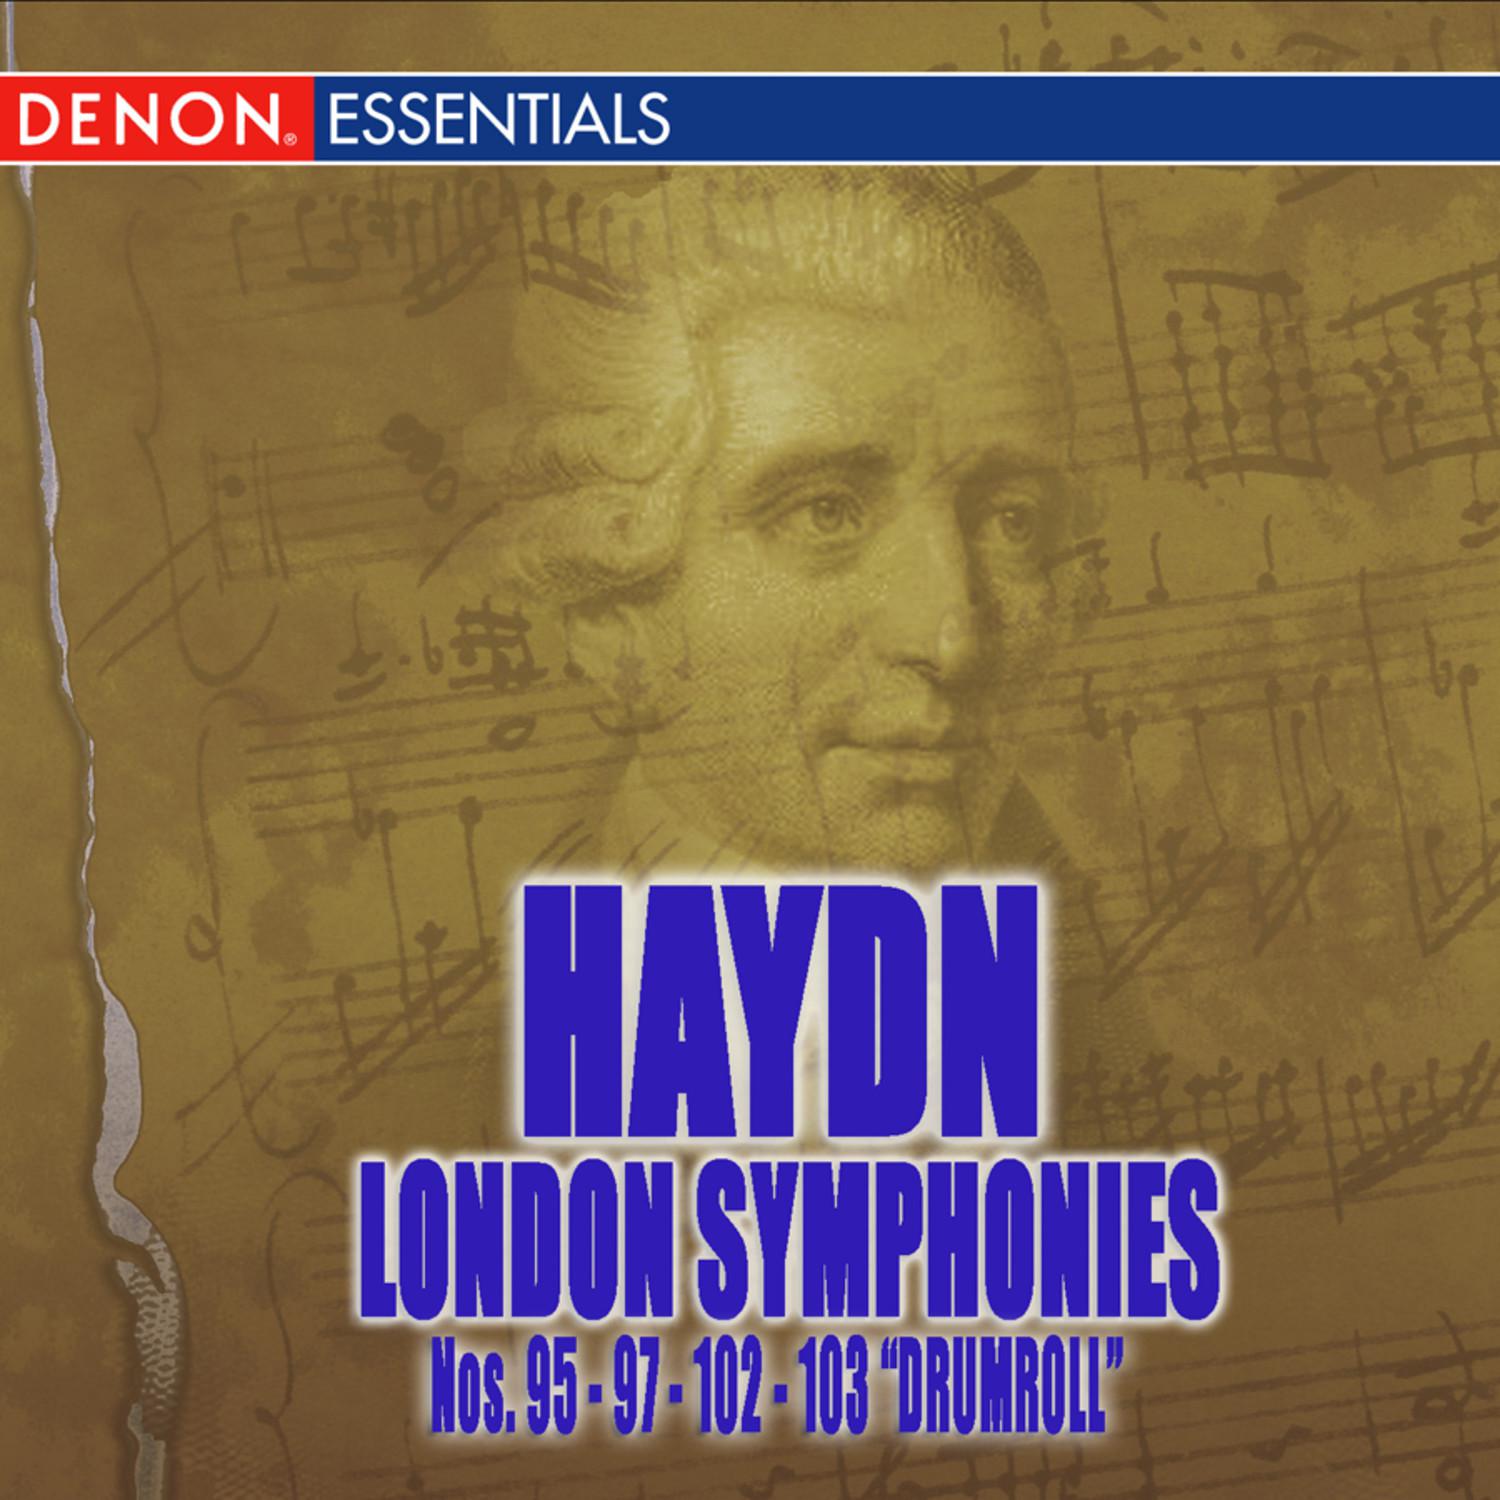 Haydn Symphony No. 103 in E-Flat Major "Drumroll": I. Adagio - Allegro con spirito